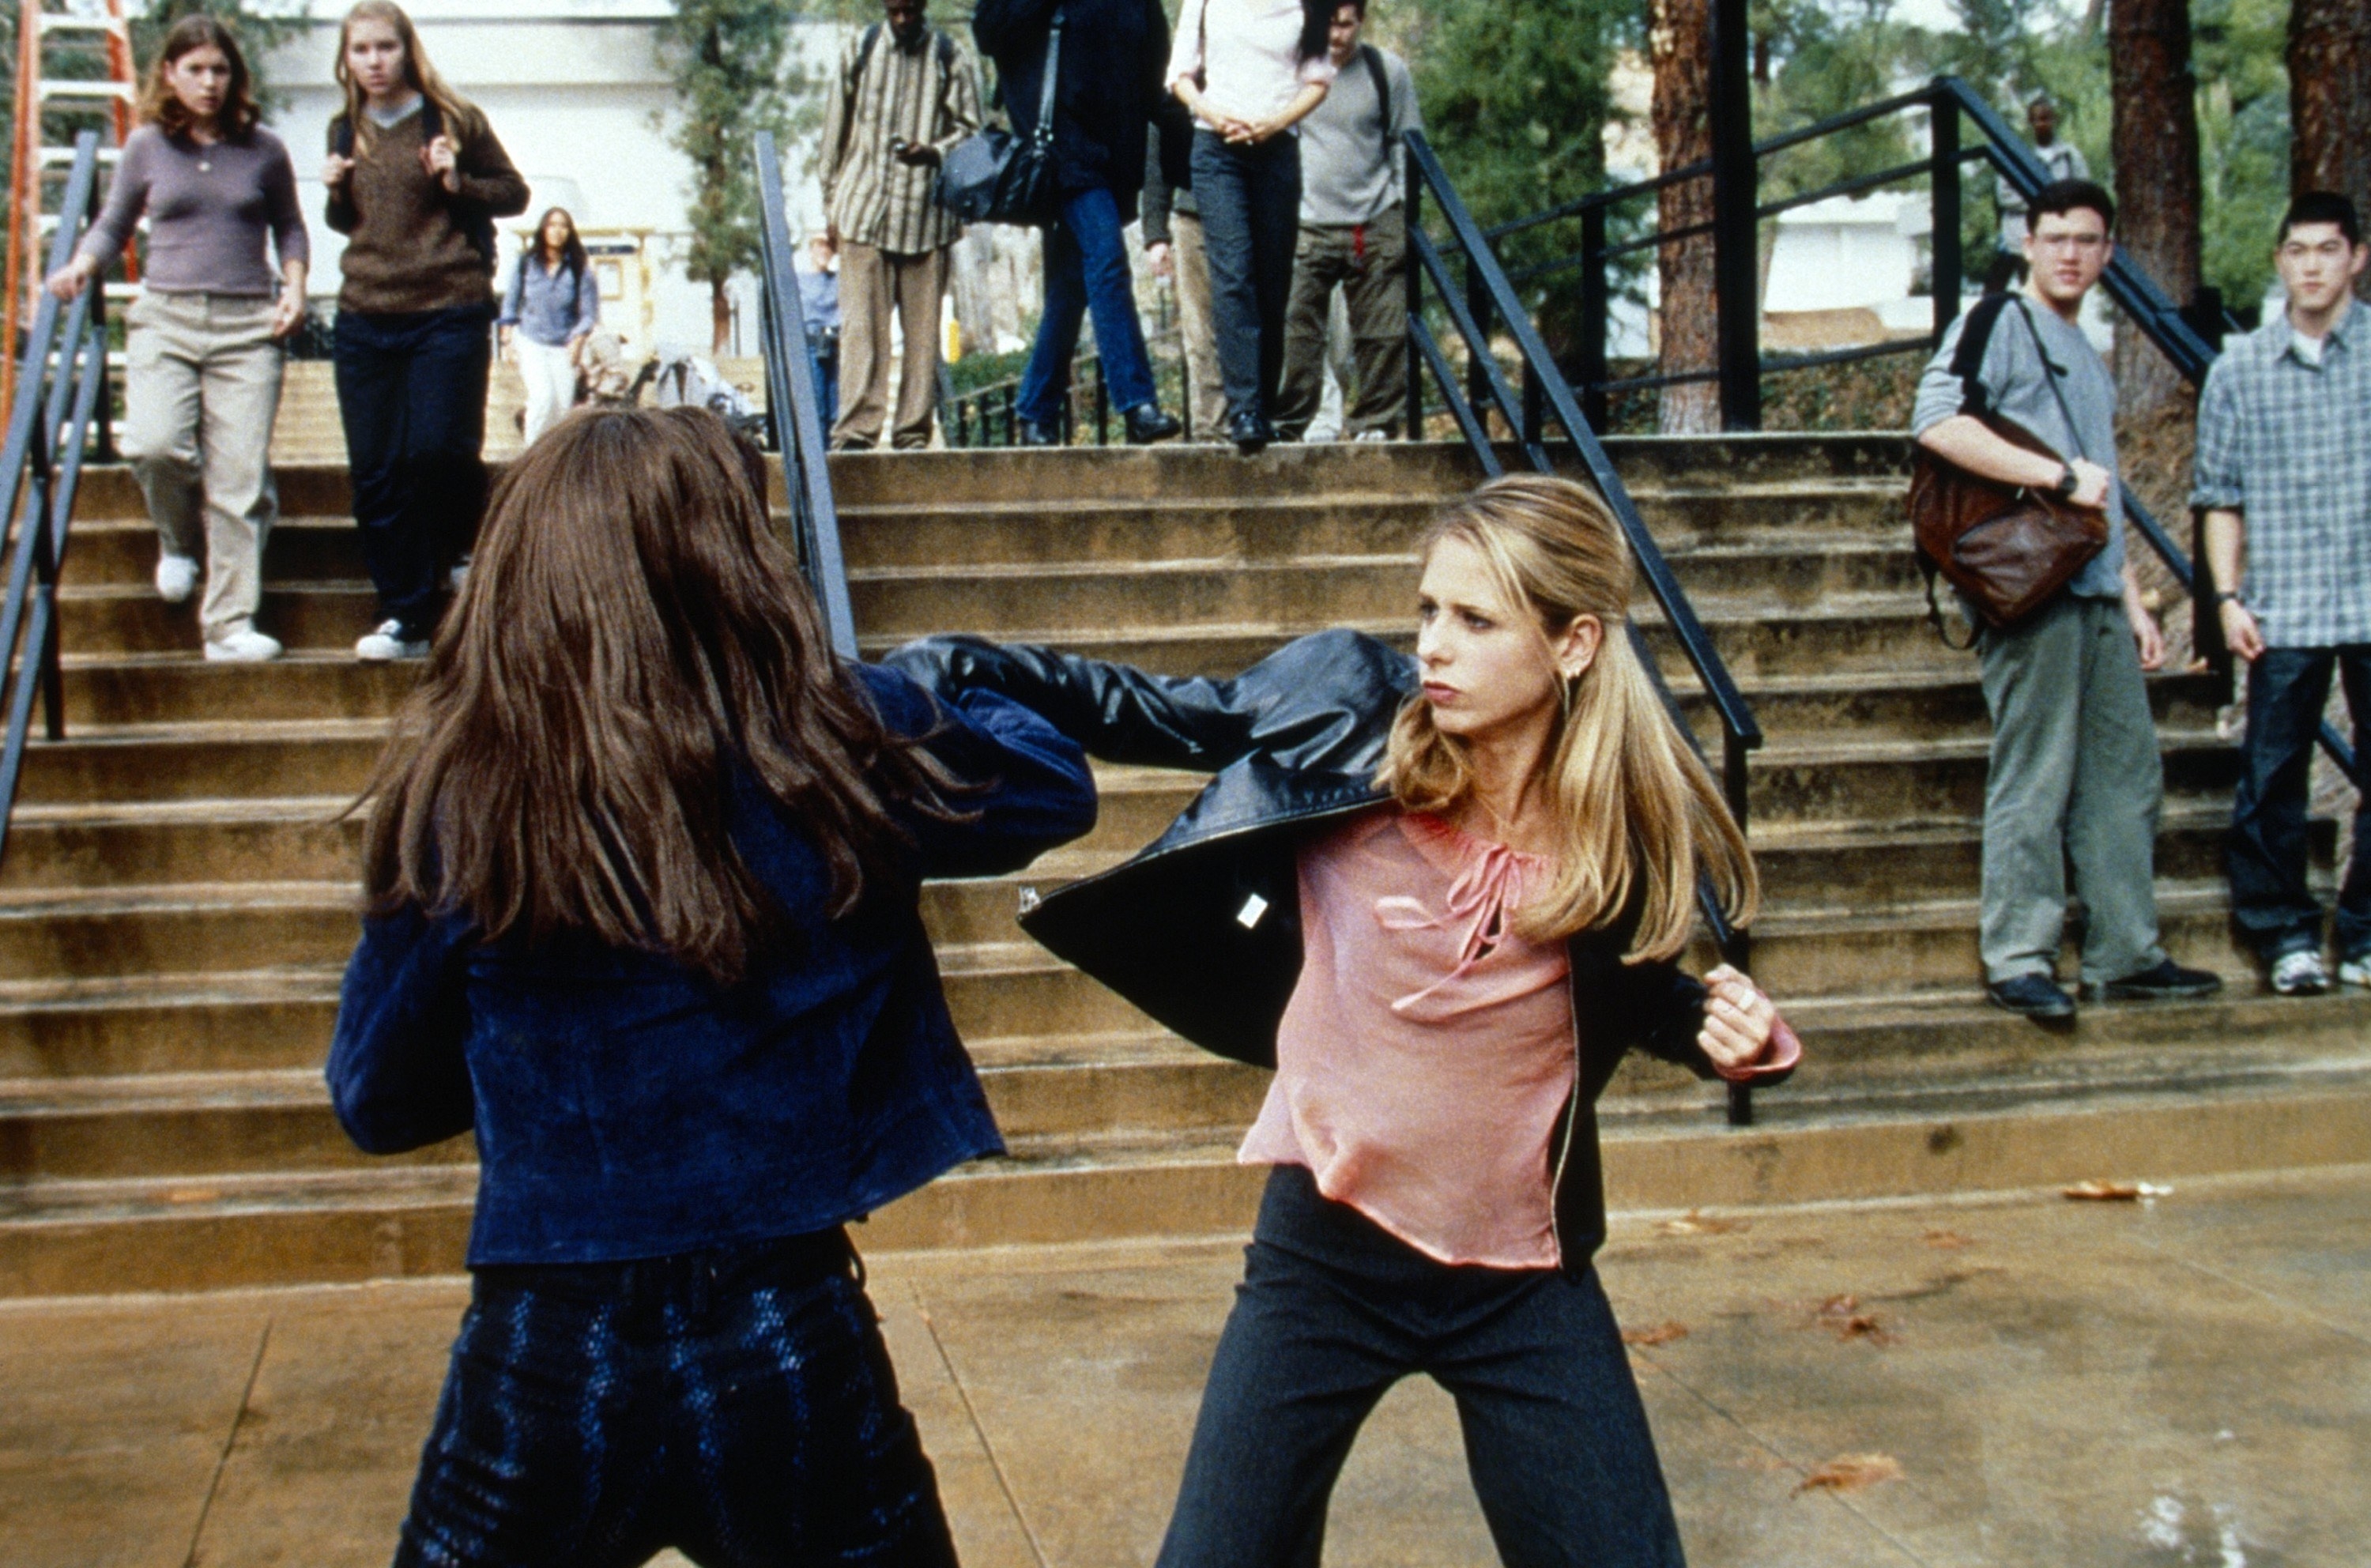 Buffy fighting someone